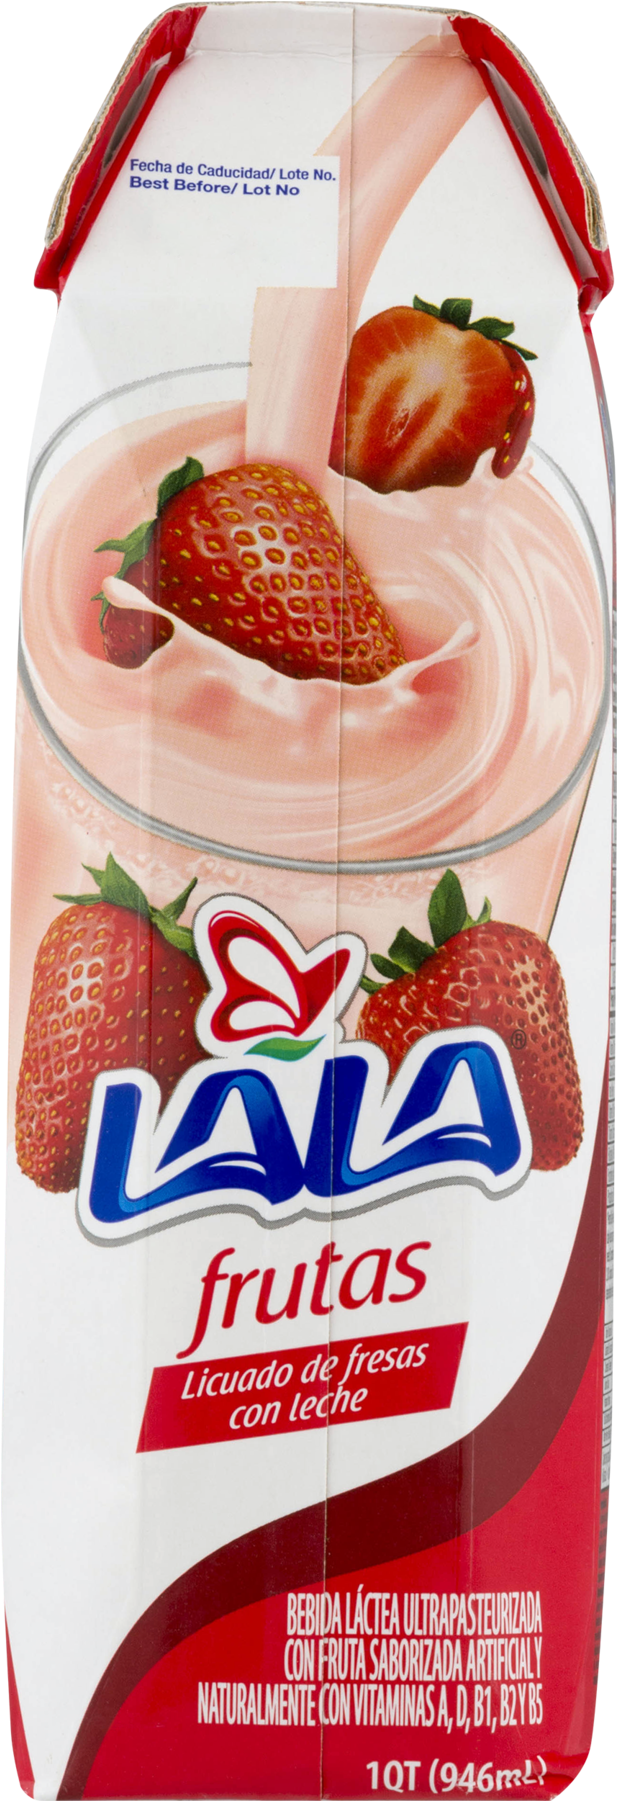 Lala Frutas Strawberry Fruit Drink, 2% Dairy Milk, - Leche Lala De Frutas (1800x1800), Png Download